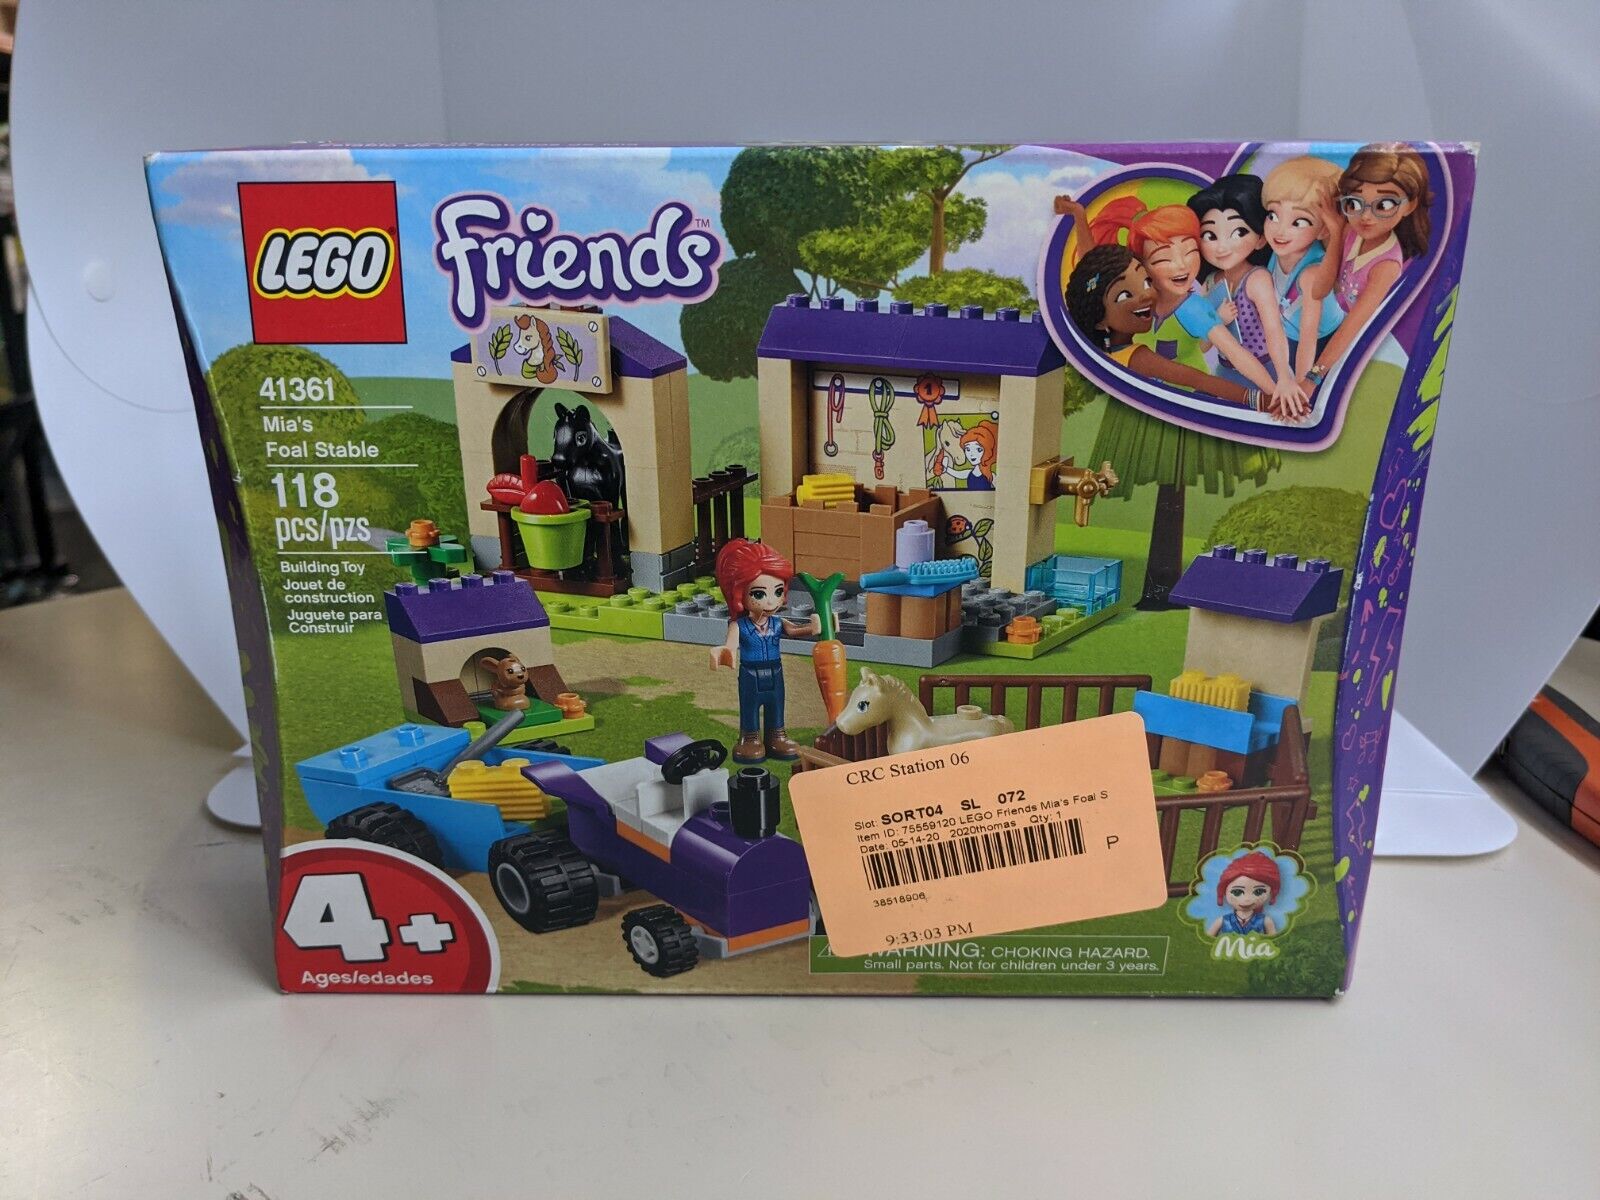 LEGO Friends Mia's Foal Stable Set (41361)